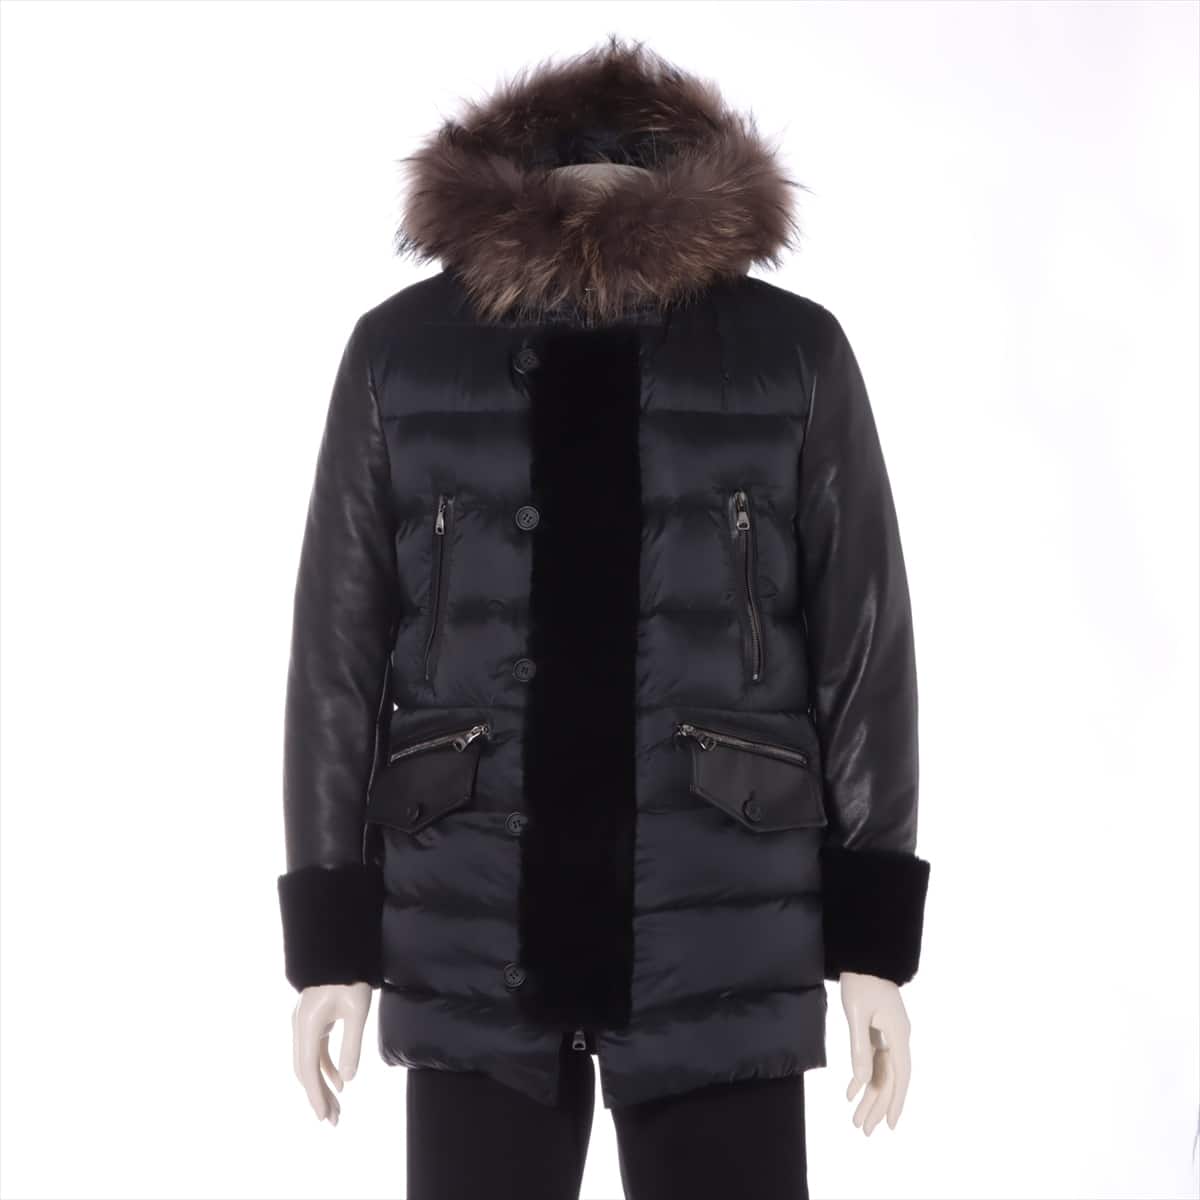 Emmeti Nylon & leather Down jacket 46 Men's Black